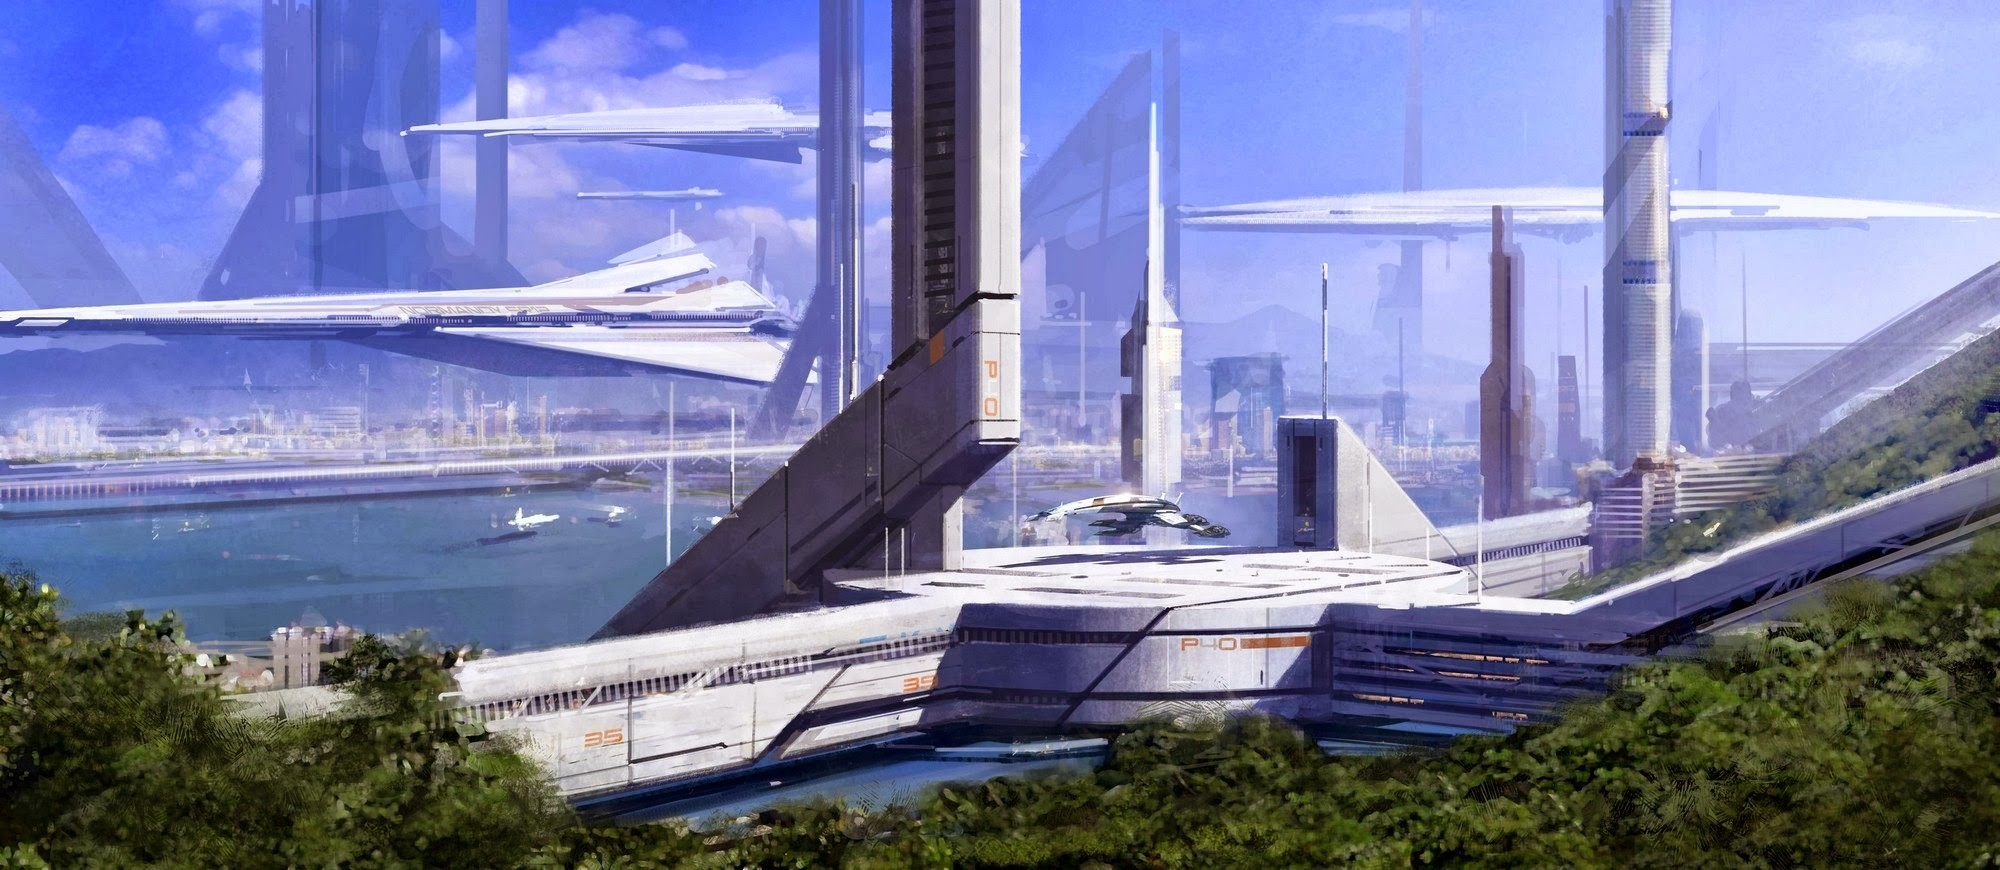 General 2000x870 Mass Effect normandy sr-1 video games The Citadel Citadel (Mass Effect) PC gaming video game art science fiction